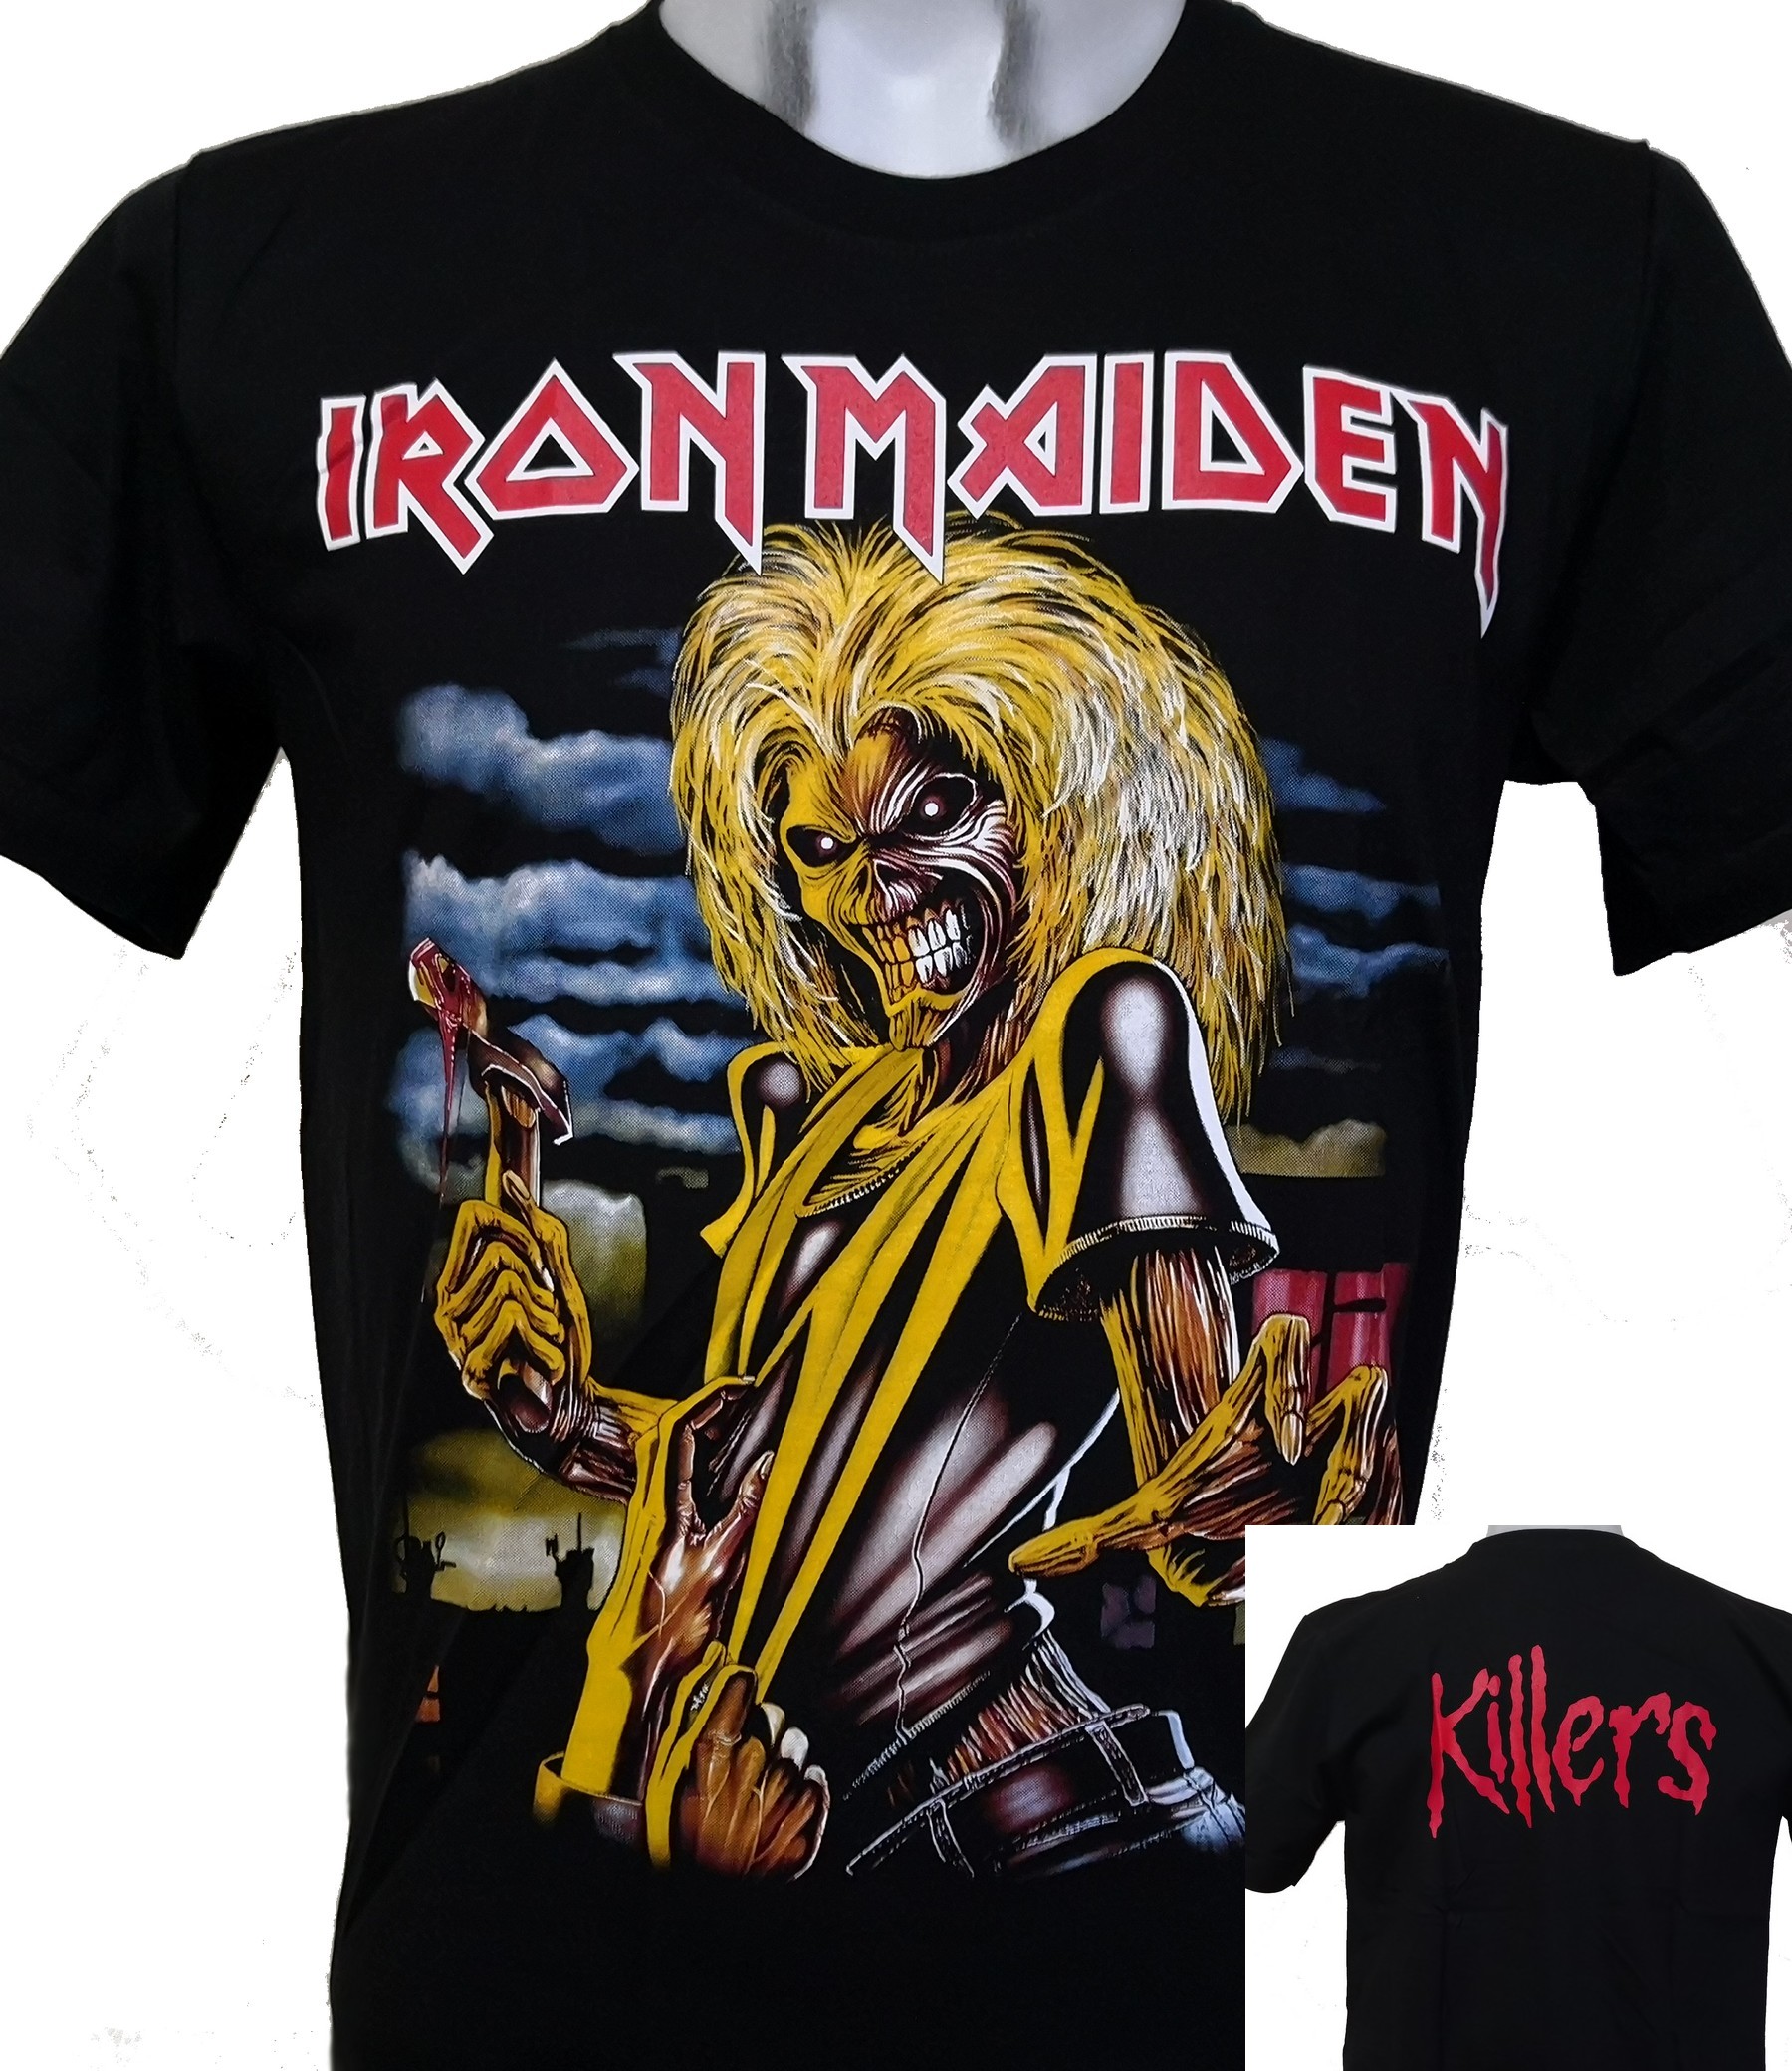 Iron Maiden t-shirt Killers size S